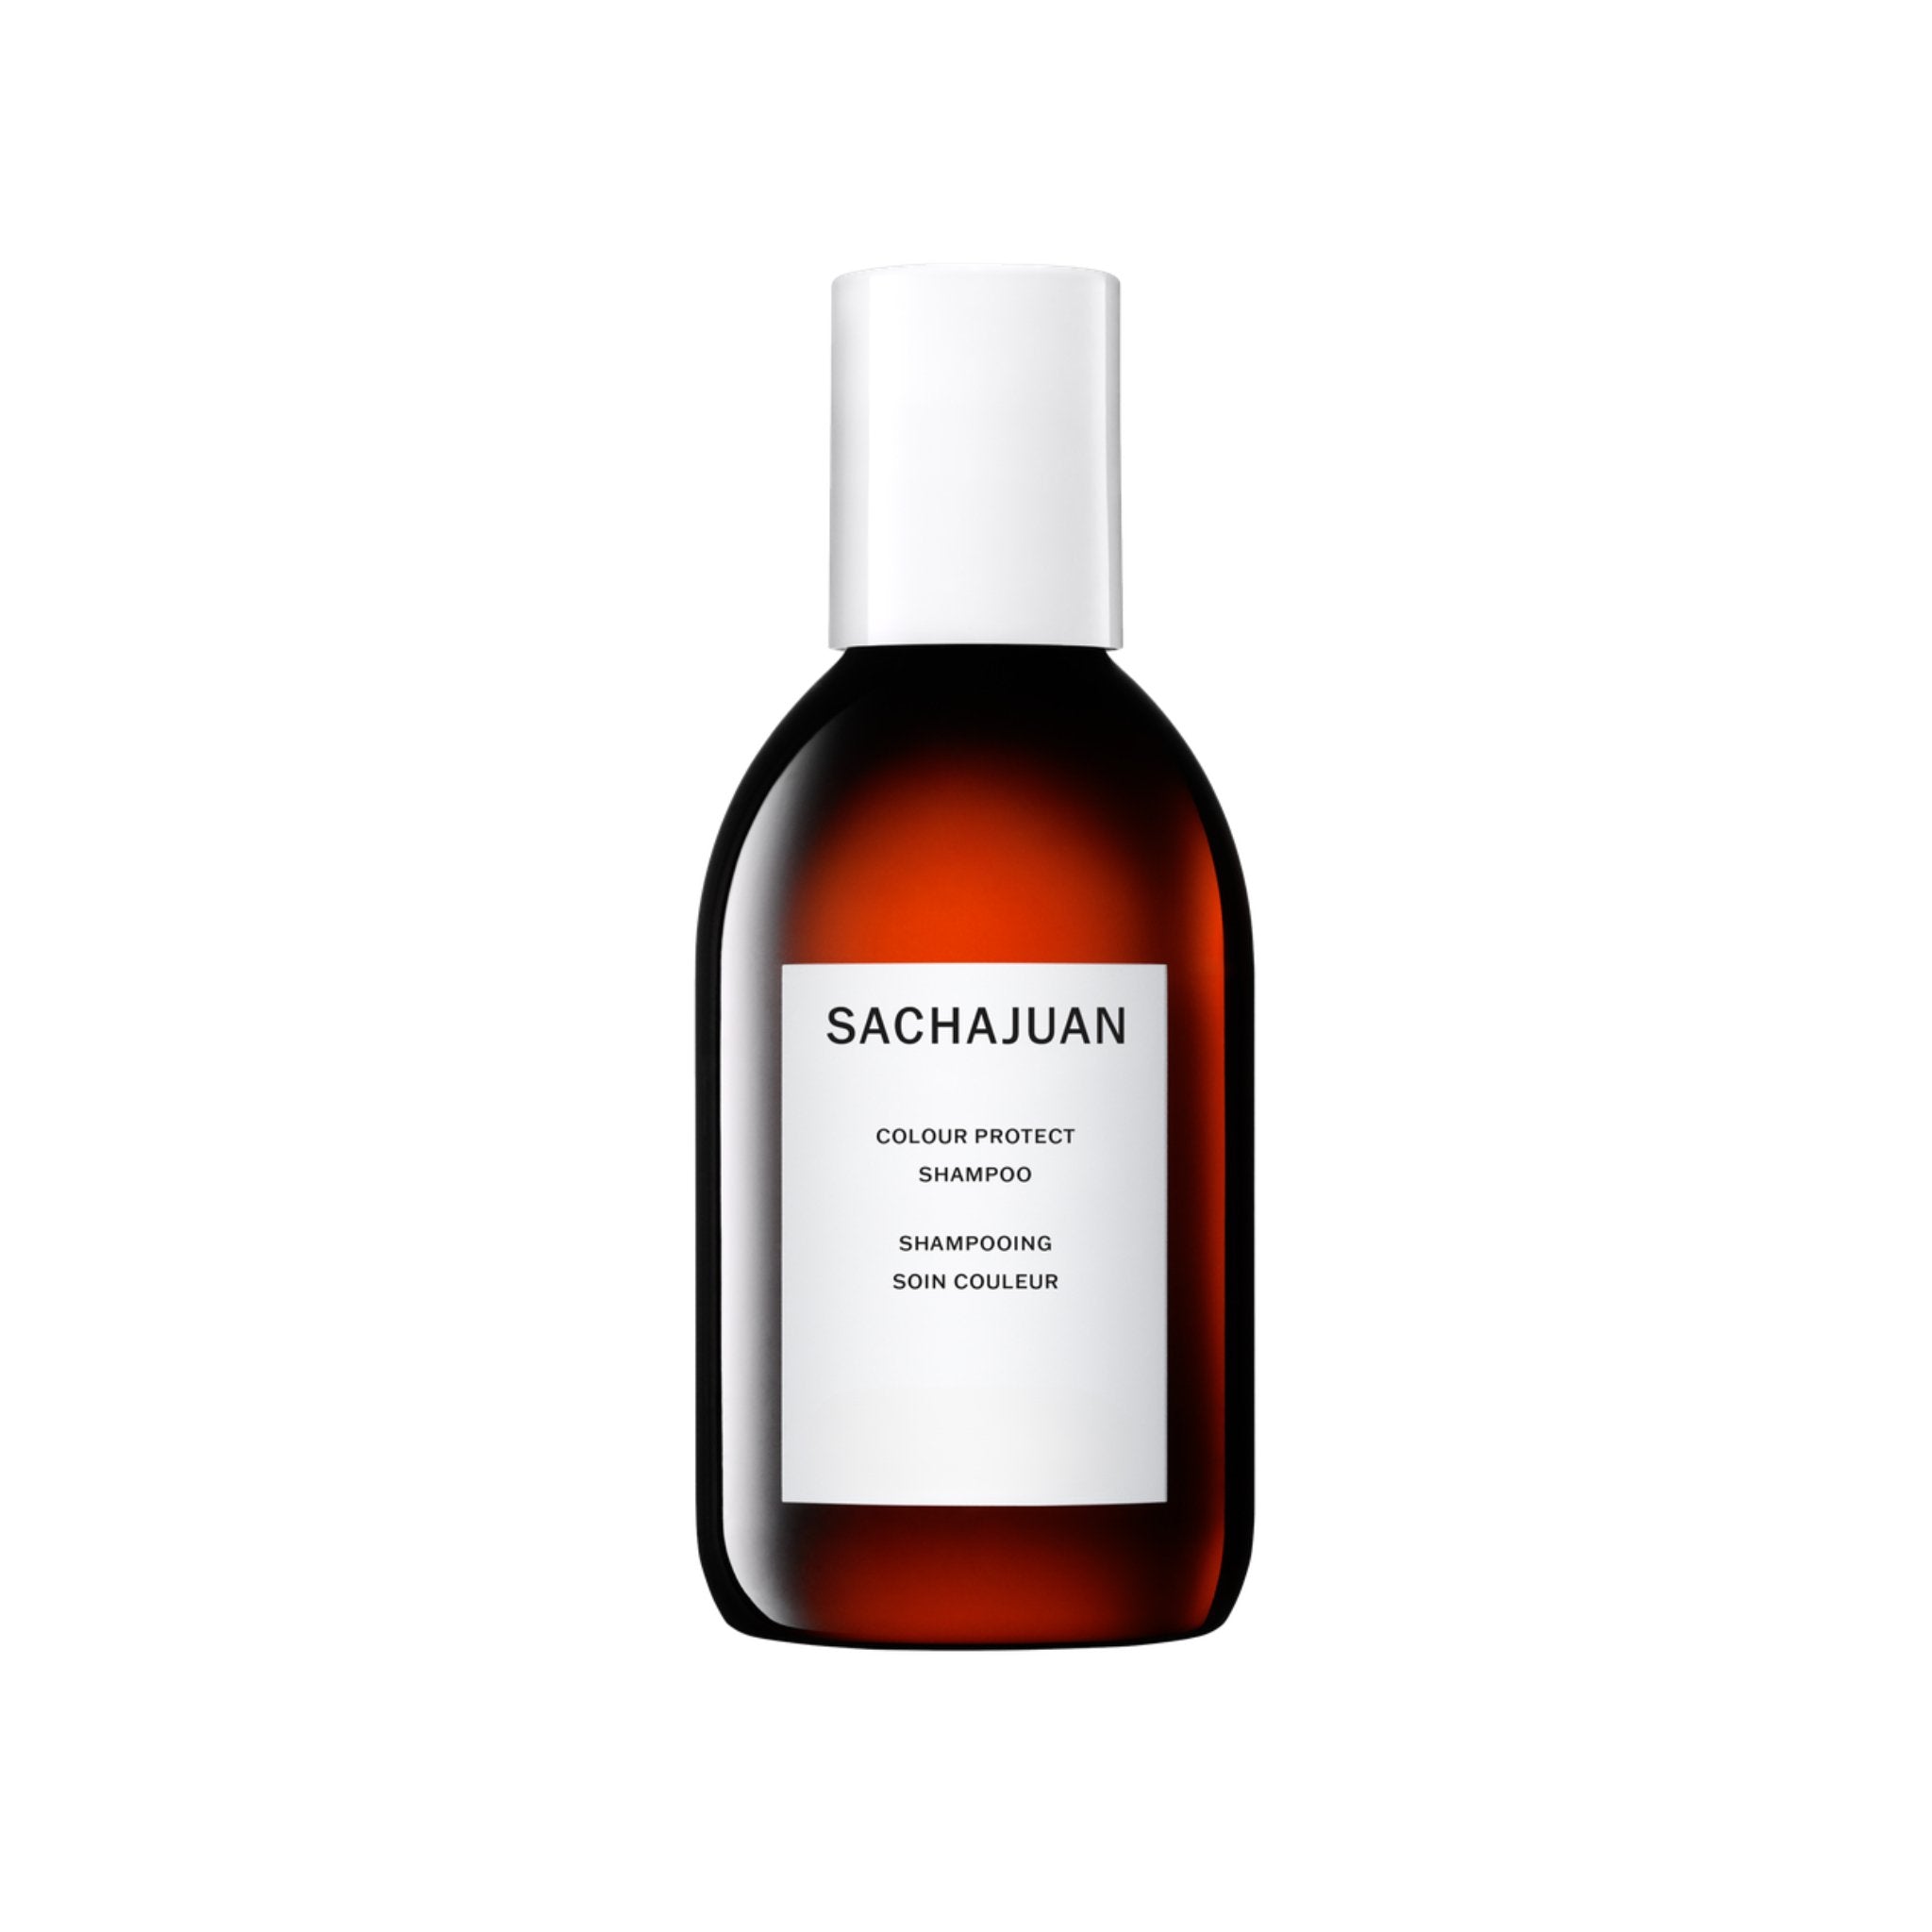 Sachajuan. Shampoing Soin Couleur - 100 ml - Concept C. Shop